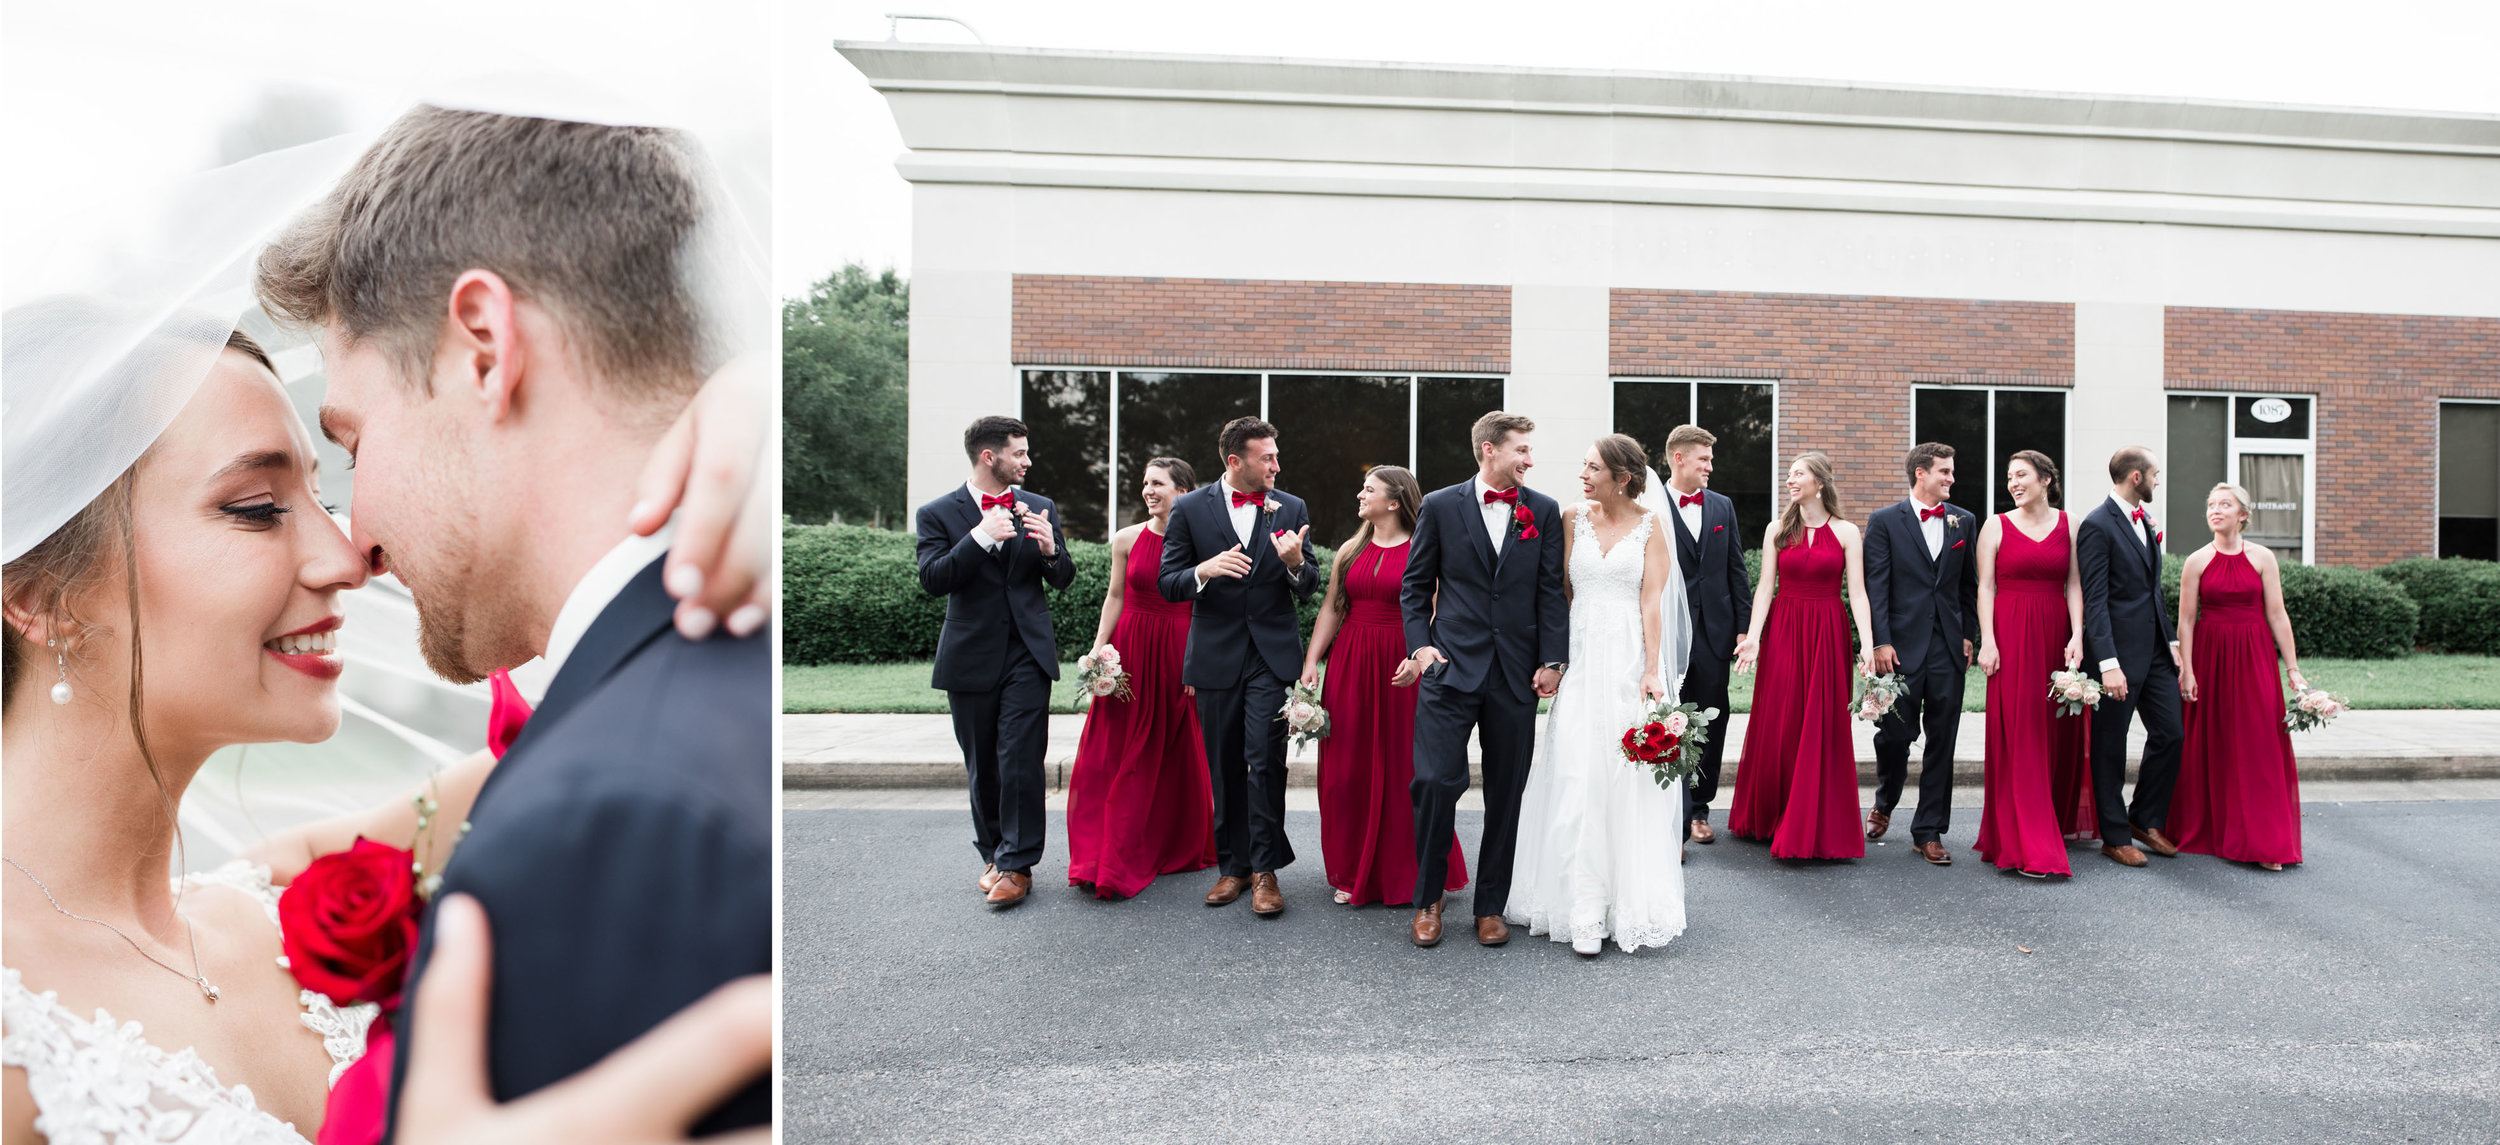 Mars Hill Church Wedding by Kristen Grubb Photography